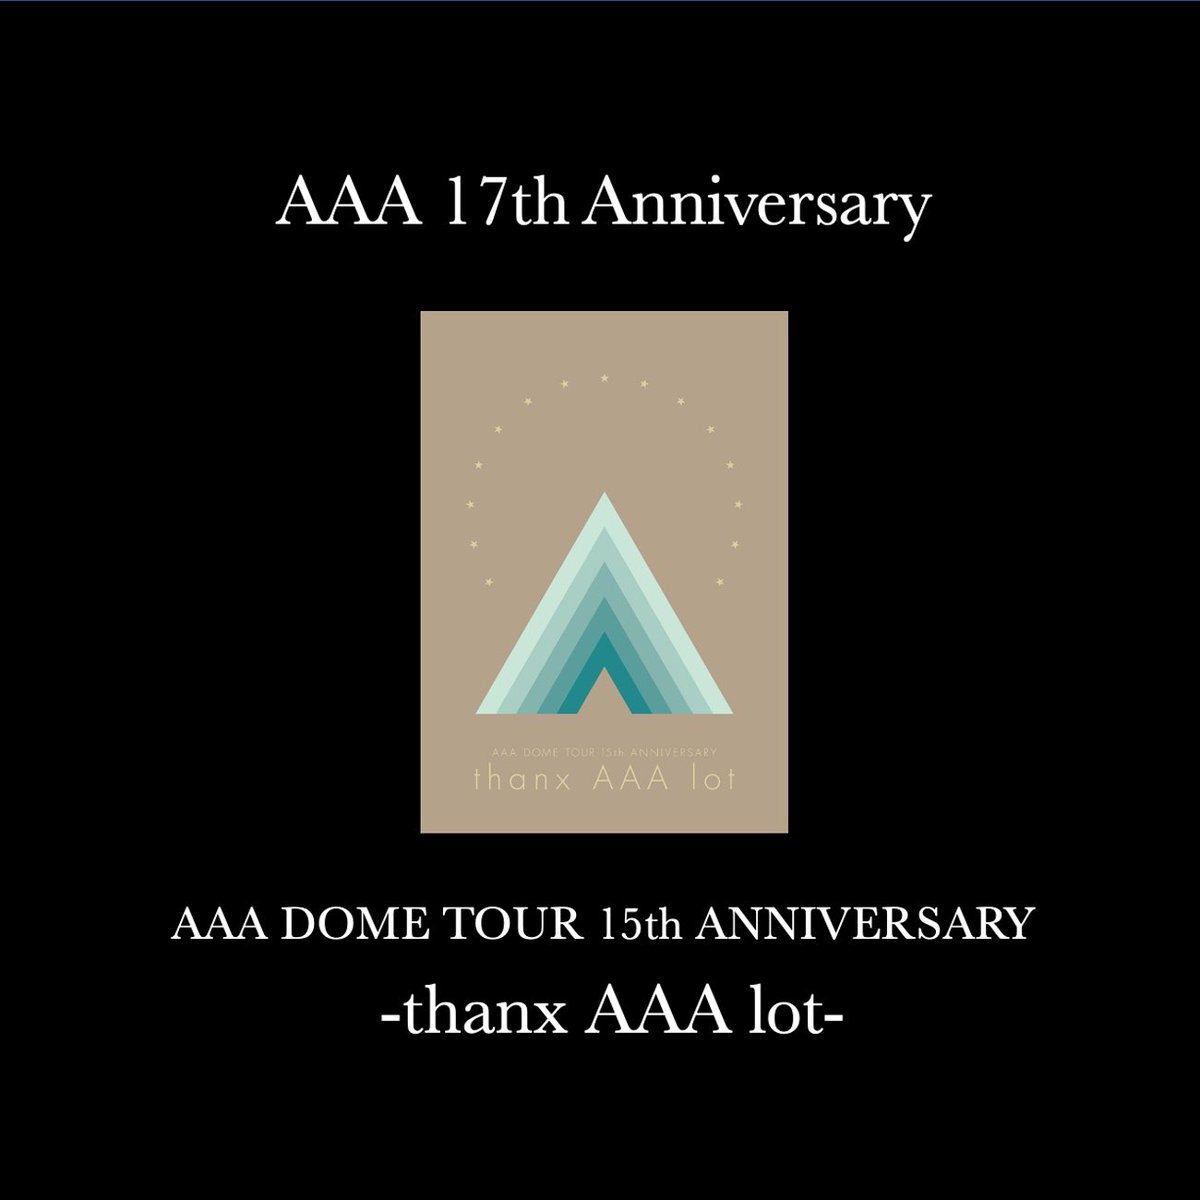 AAAデビュー17周年💫を記念して、 9/5から9/14まで YouTubeにて「AAA DOME TOUR 15th ANNIVERSARY -thanx AAA lot-」の中から厳選したLIVE映像を公開します‼️ 詳細はこちら 👉avex.jp/aaa/news/detai… ぜひ楽しみにしていてくださいね🌟 #AAA #トリプルエー #thanxAAAlot #AAA17thAnniversary